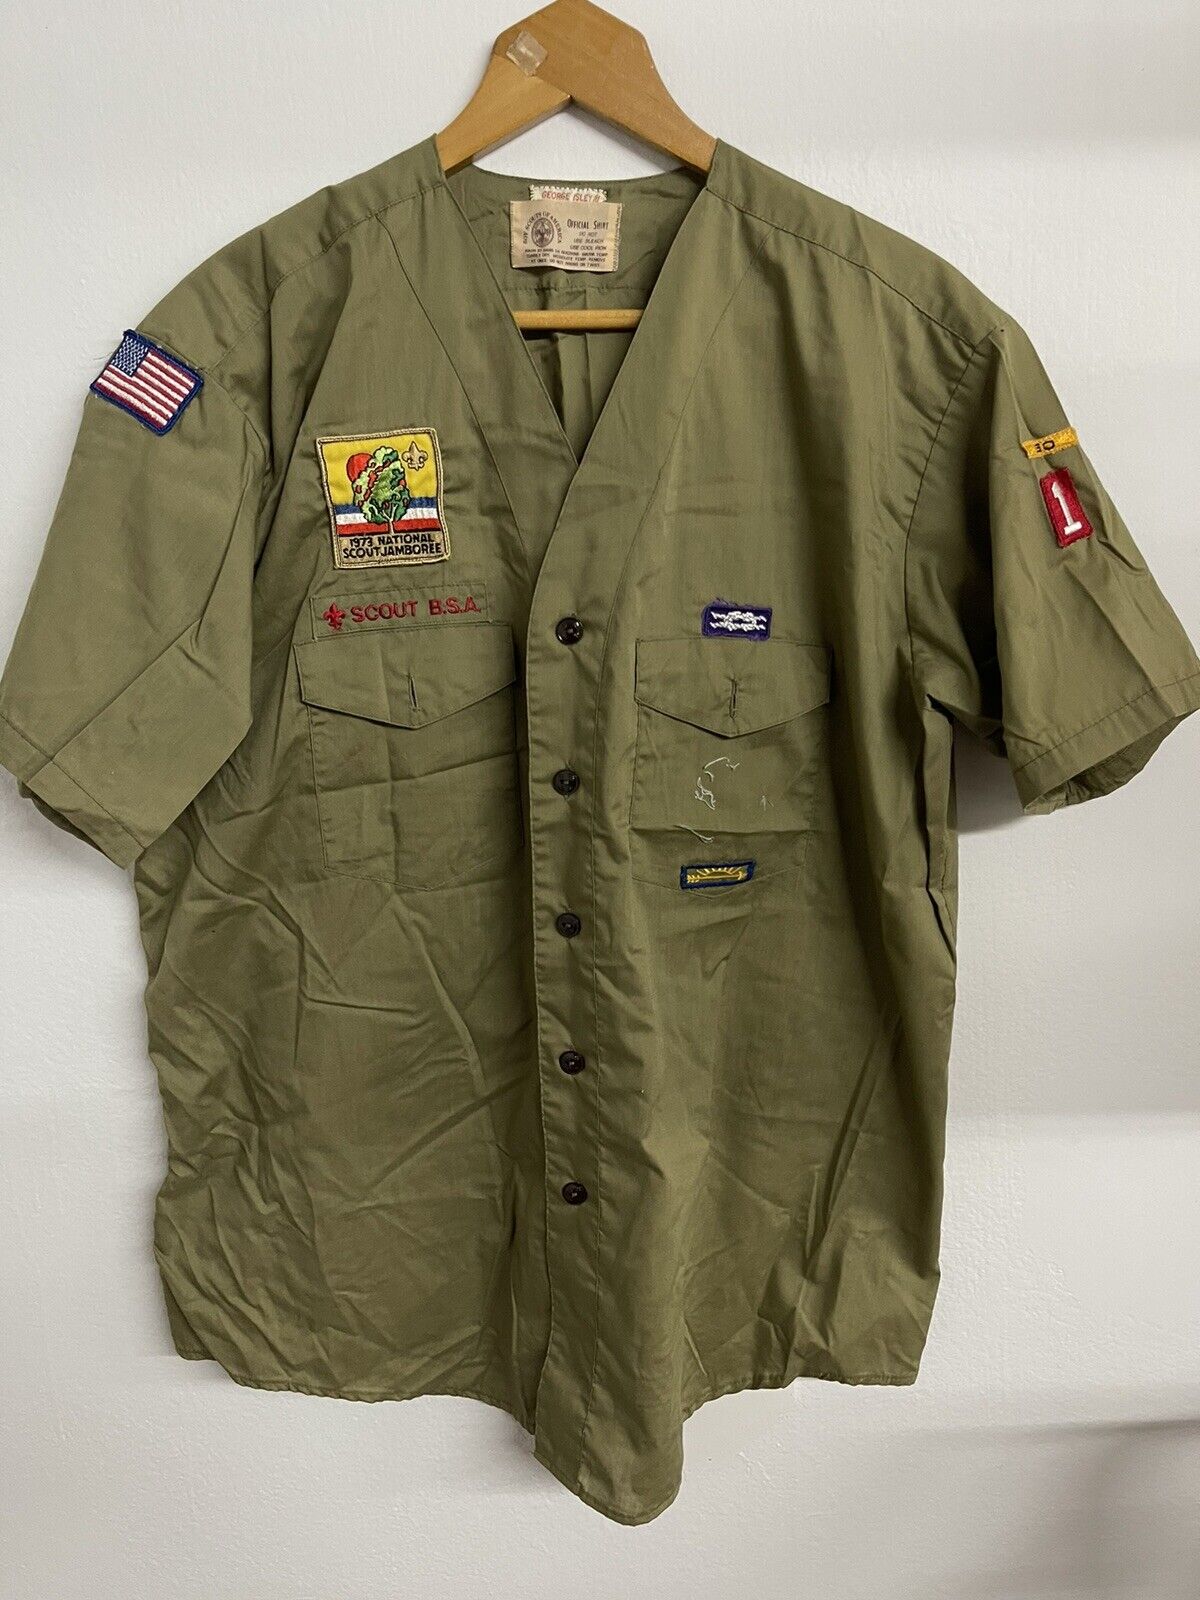 Vintage Boy Scouts Of America BSA Khaki Green Shirt w/ Patches 1970s